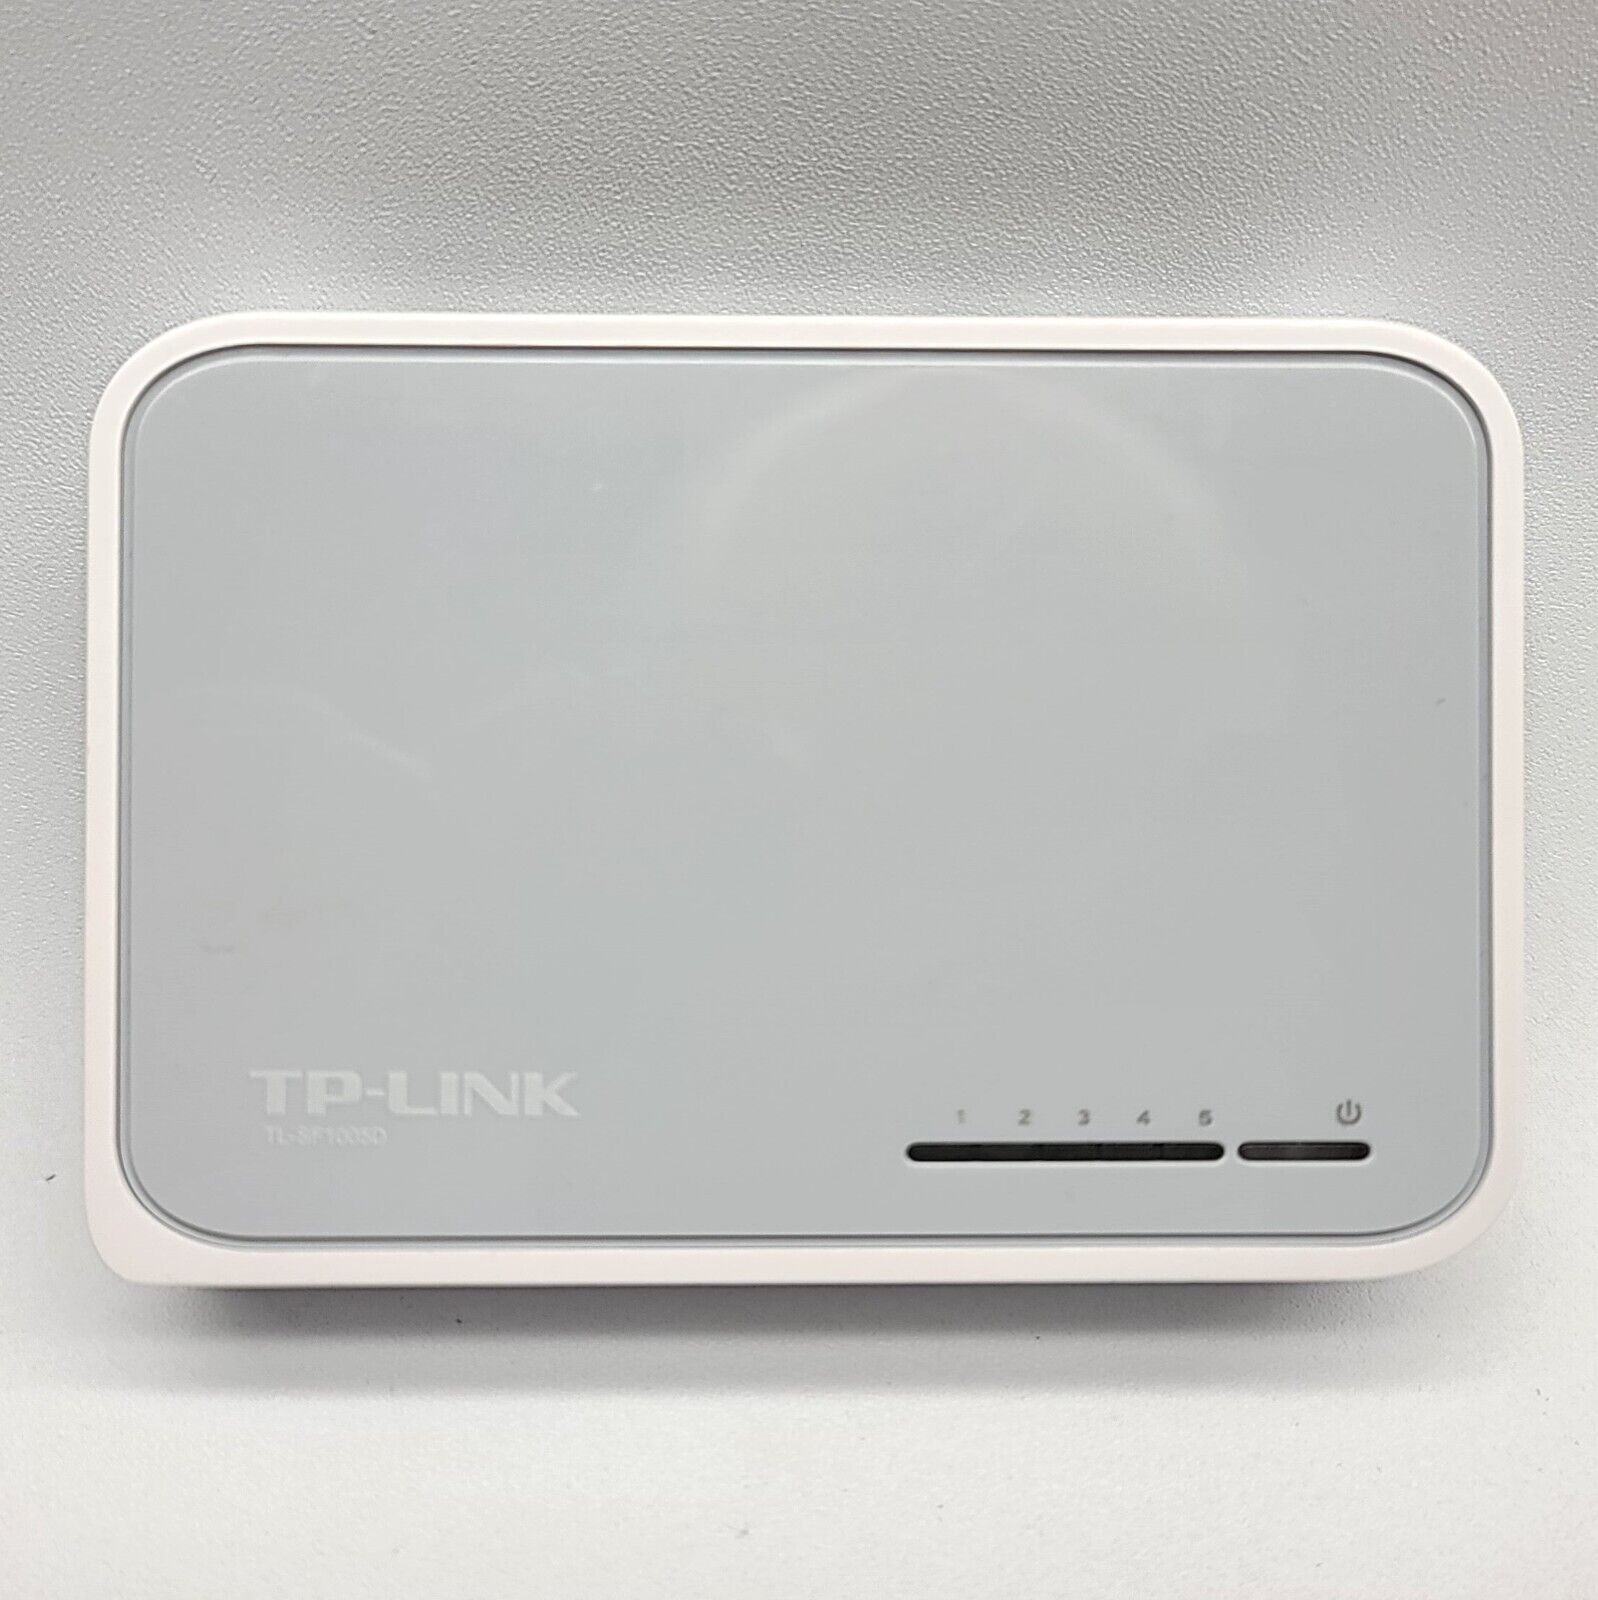 ⭐ TP-Link 5 Port 10/100 Mbps Desktop Ethernet Switch TL-SF1005D - No Power Cord